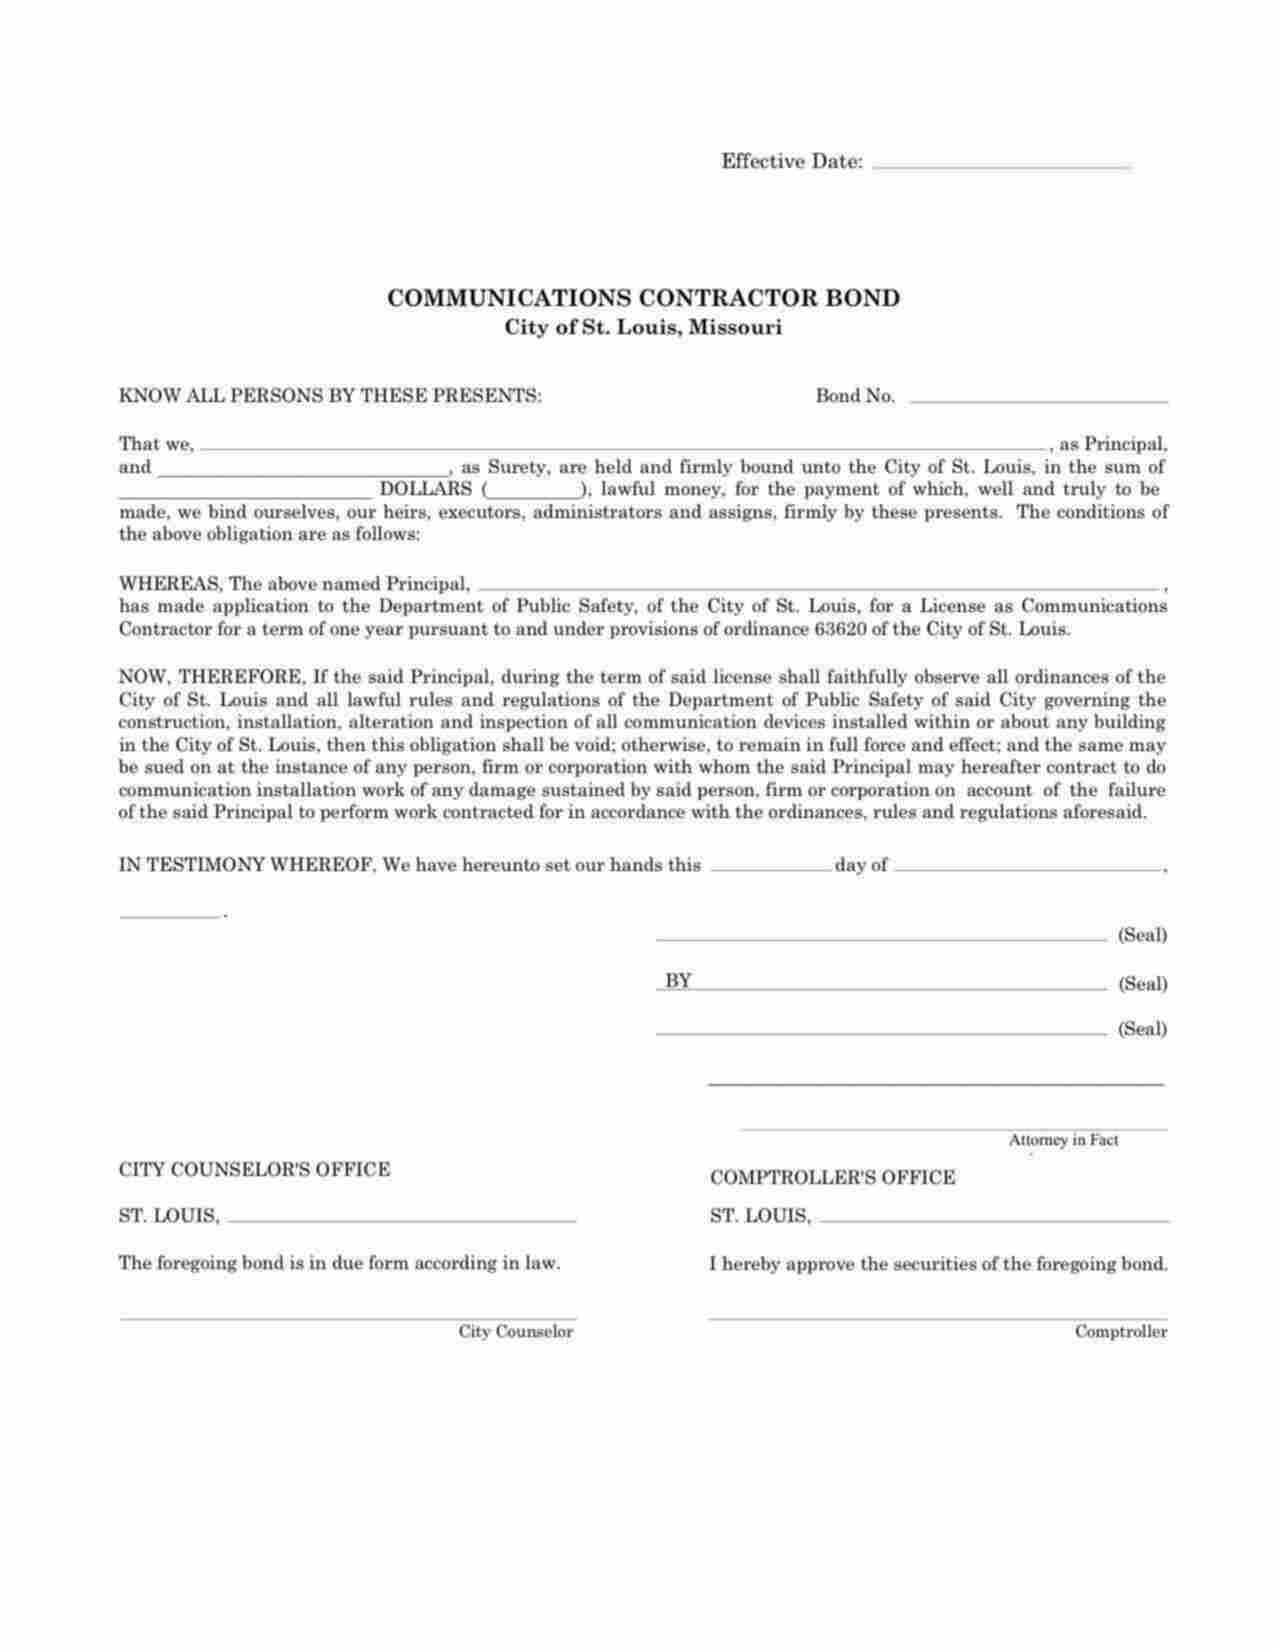 Missouri Communications Contractor Bond Form